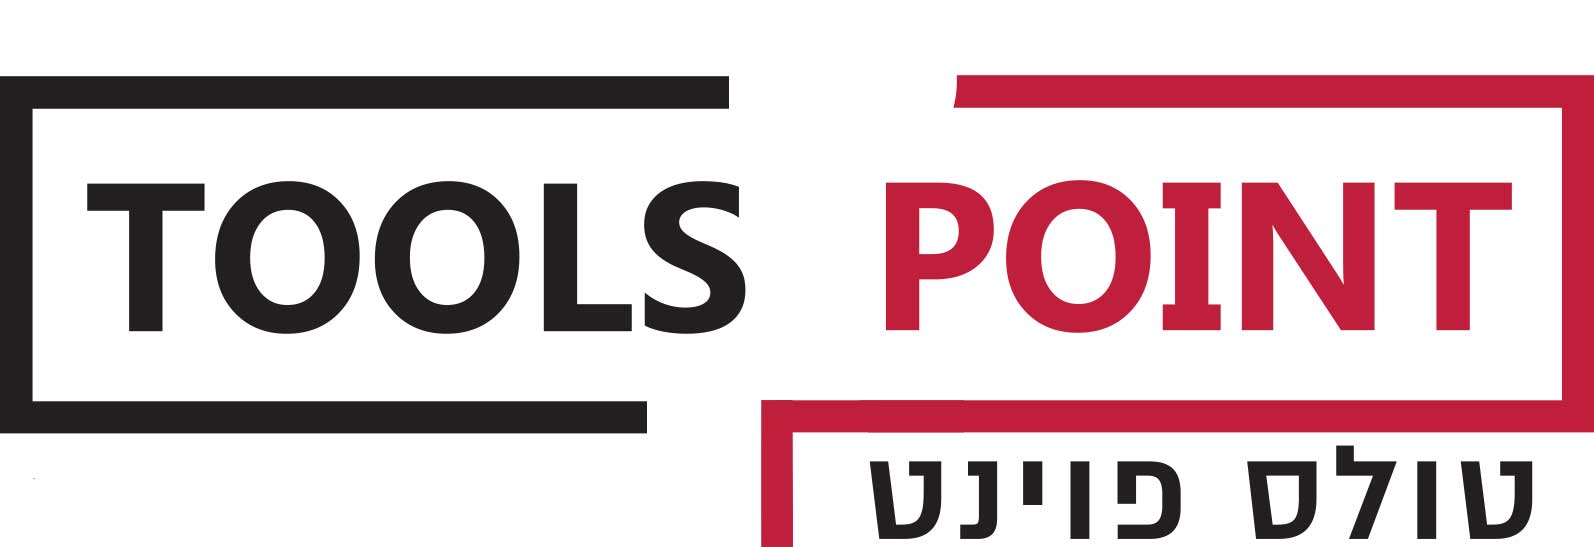 toolspoint logo